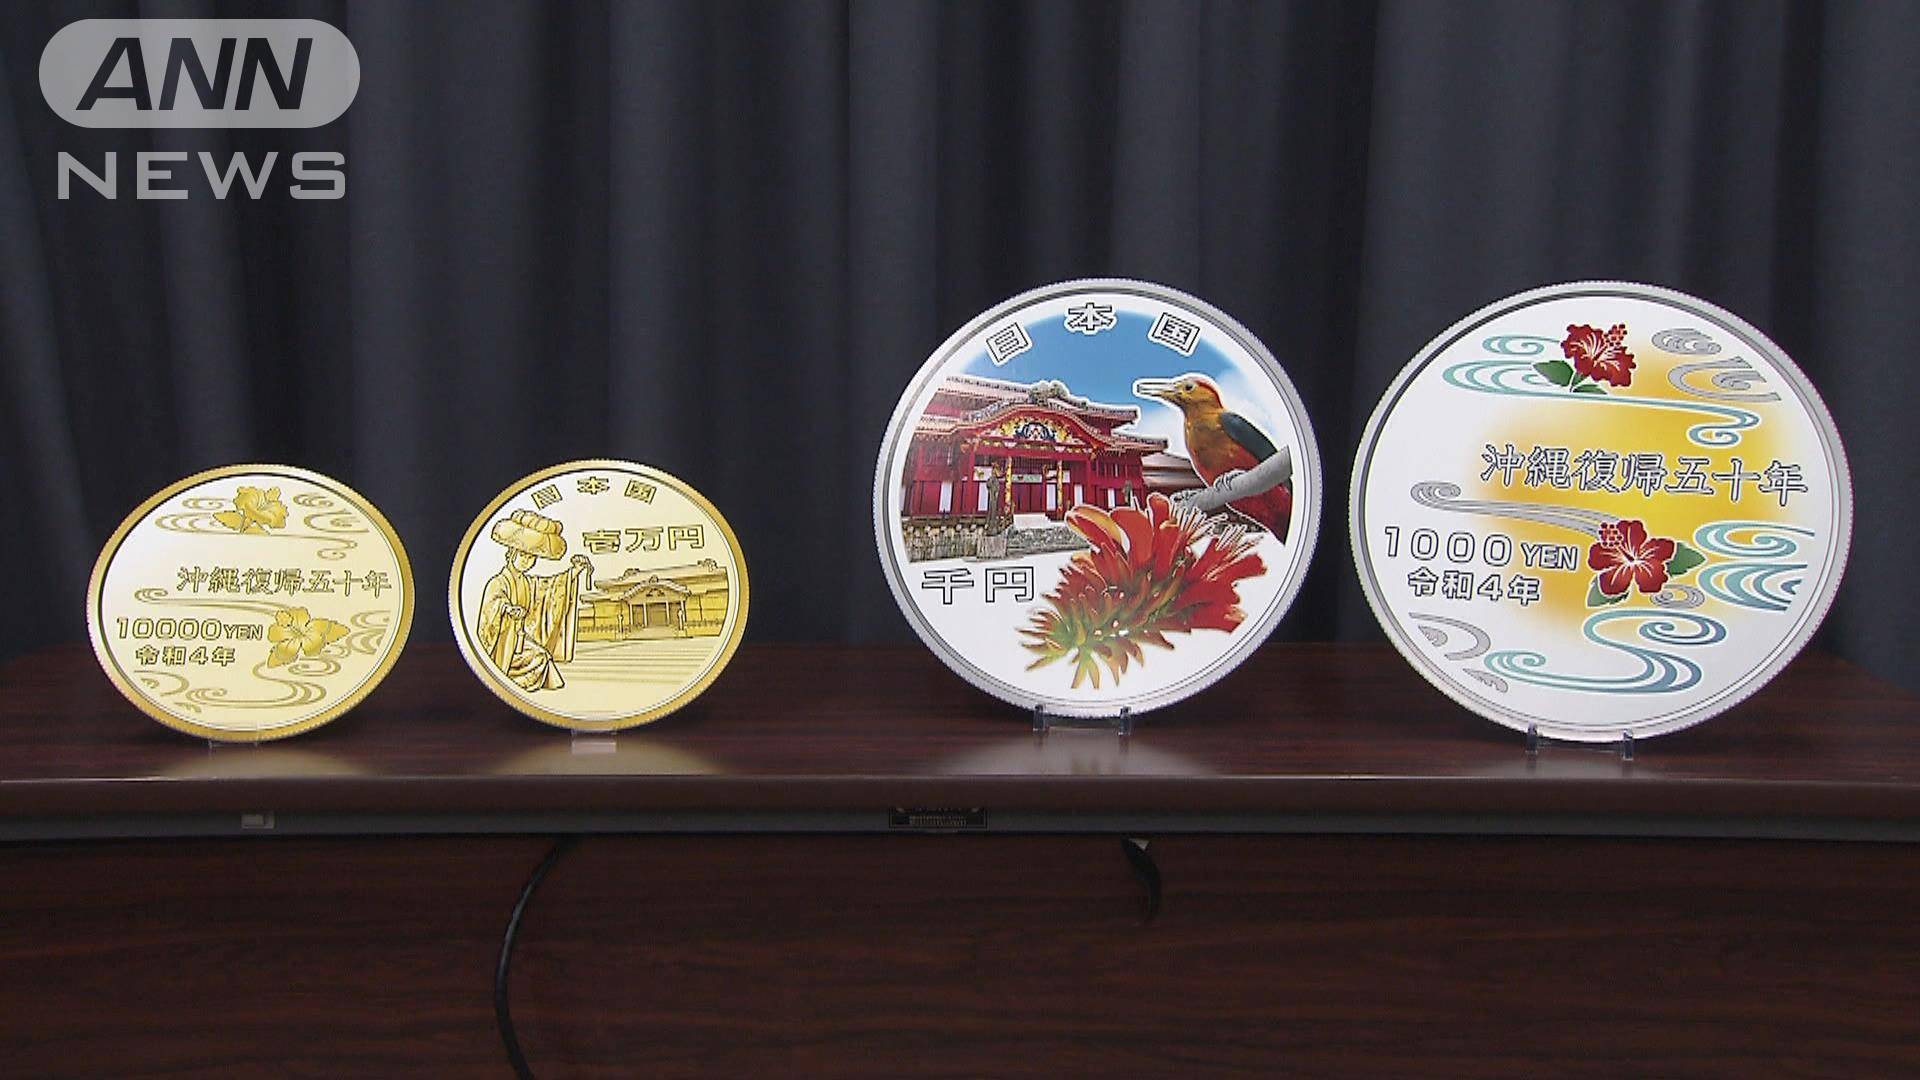 沖縄復帰50年　記念硬貨を発行へ　1万円金貨、千円銀貨の2種類